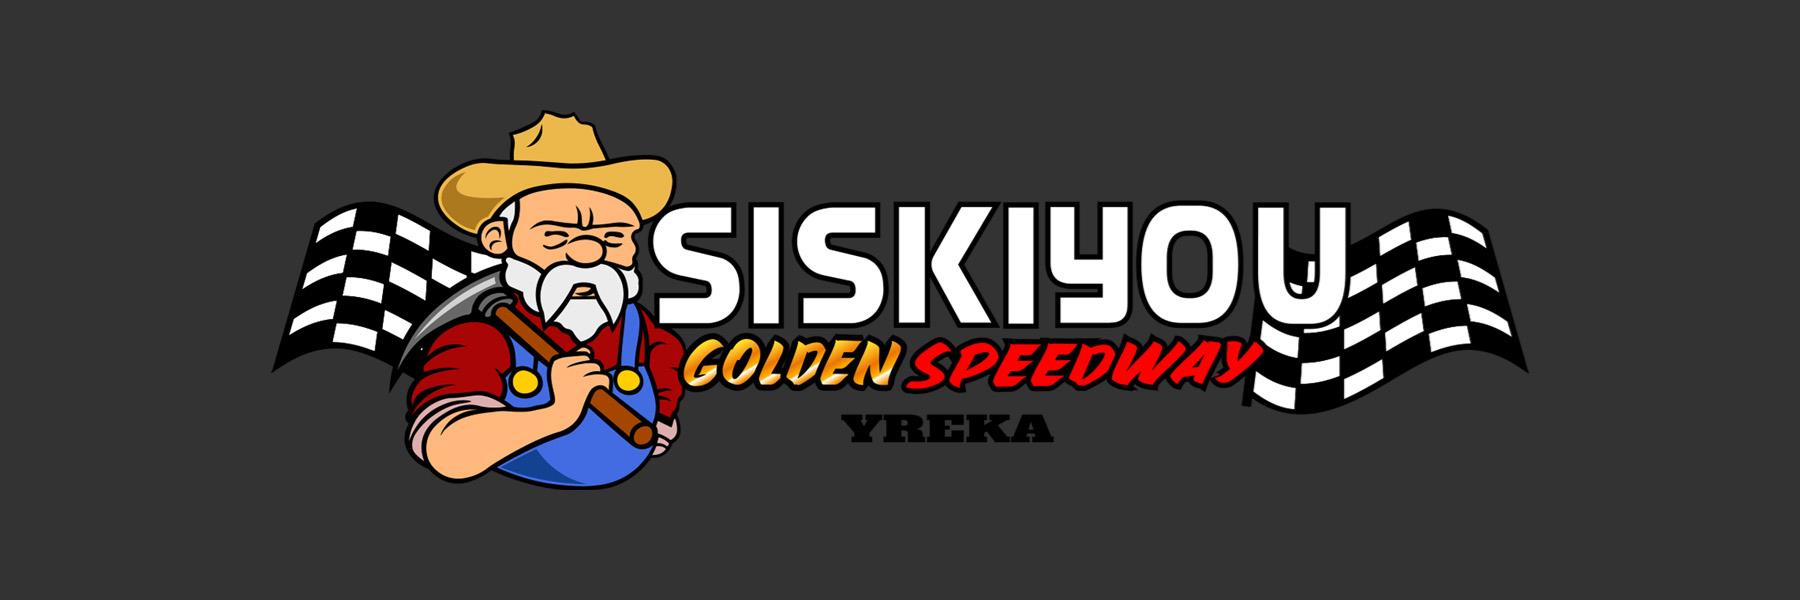 7/3/2020 - Siskiyou Golden Speedway